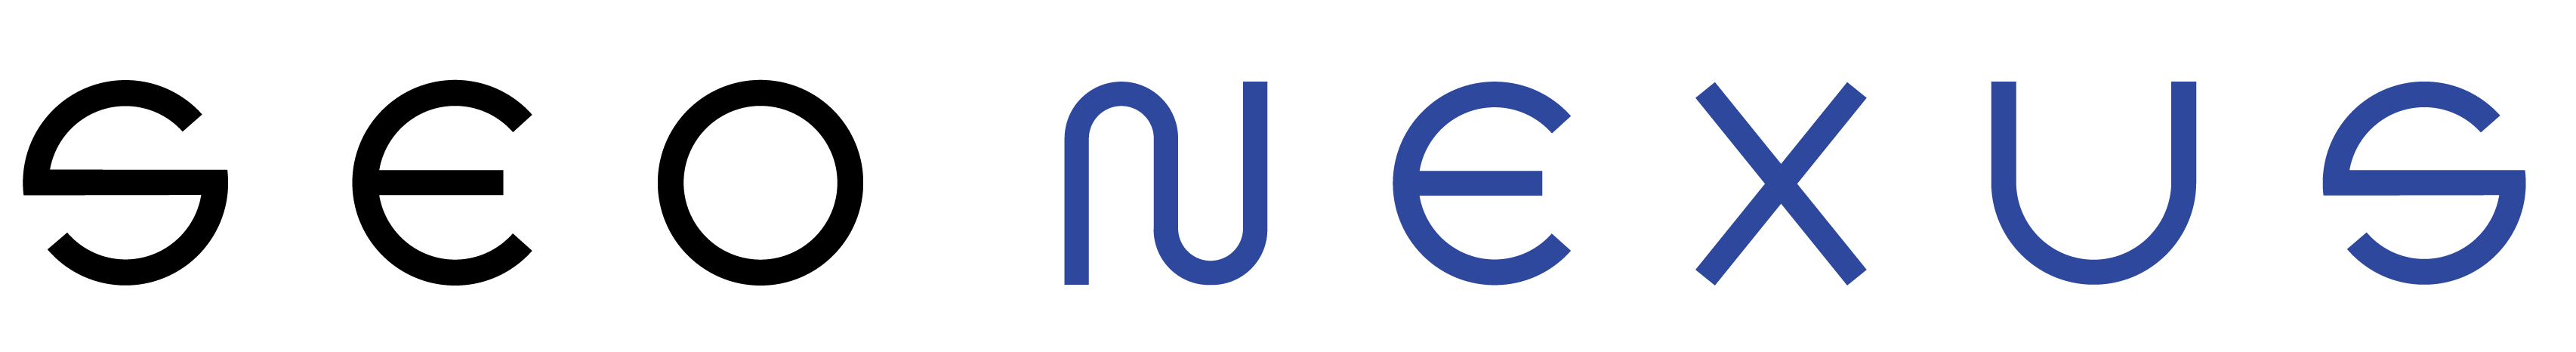 Top SEO Company Logo: SEO Nexus